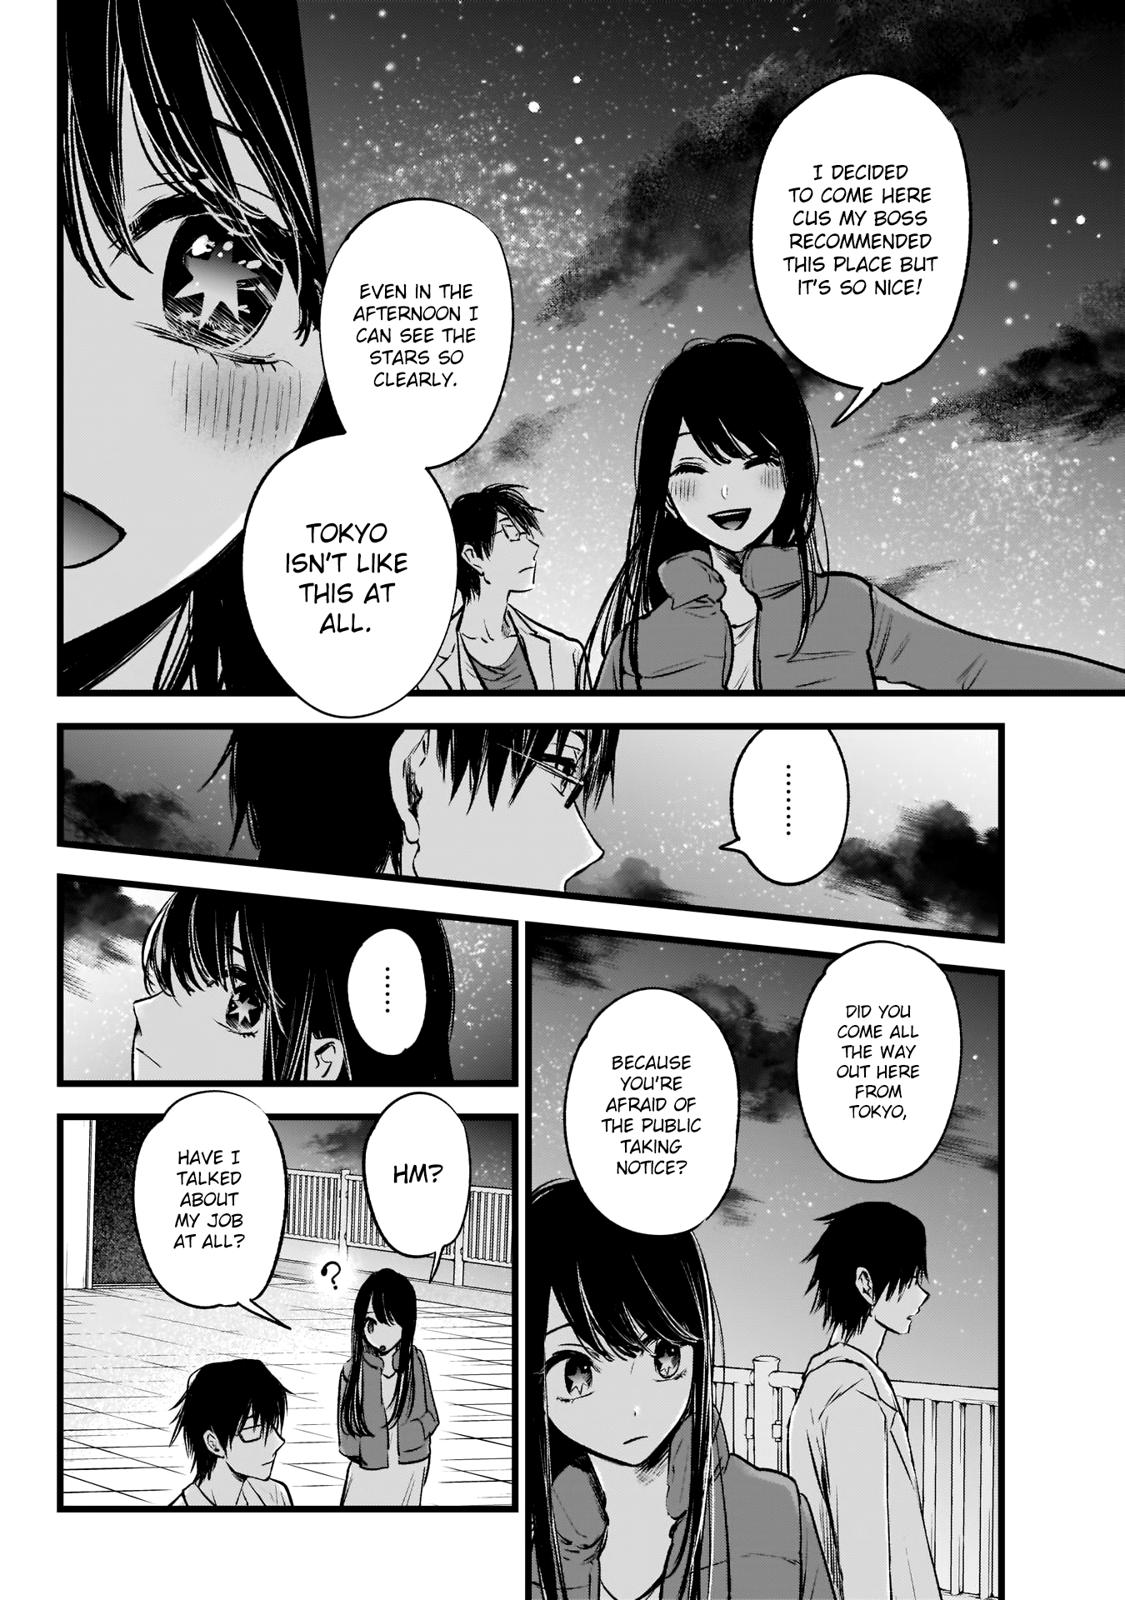 Oshi No Ko Manga Manga Chapter - 1 - image 24